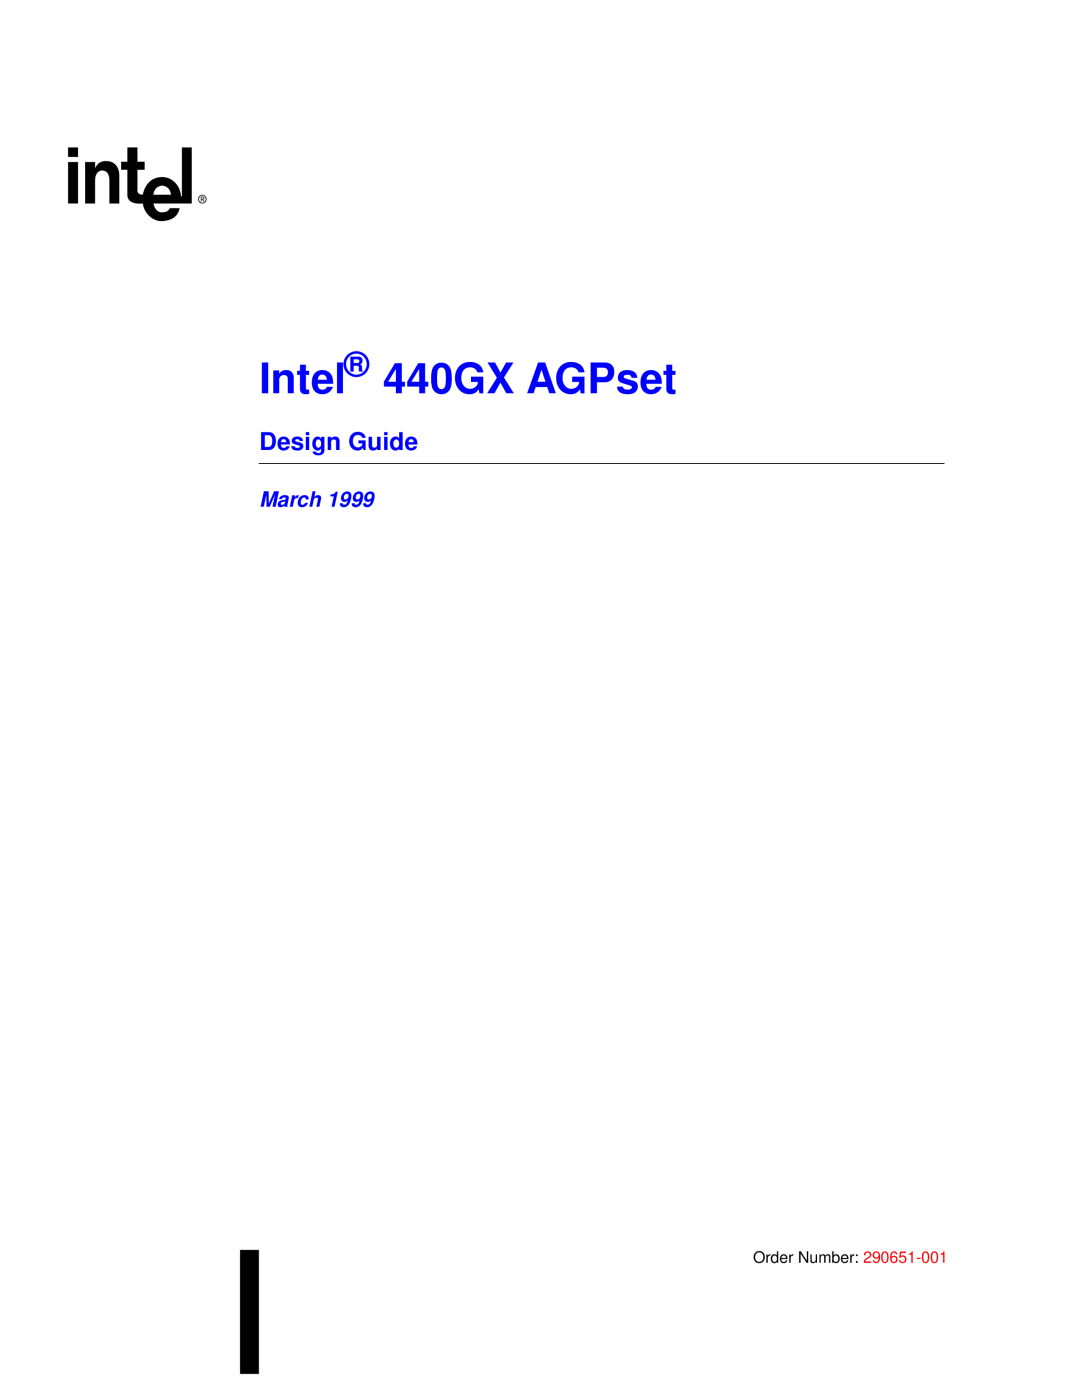 Intel manual Design Guide, Intel 440GX AGPset, March 